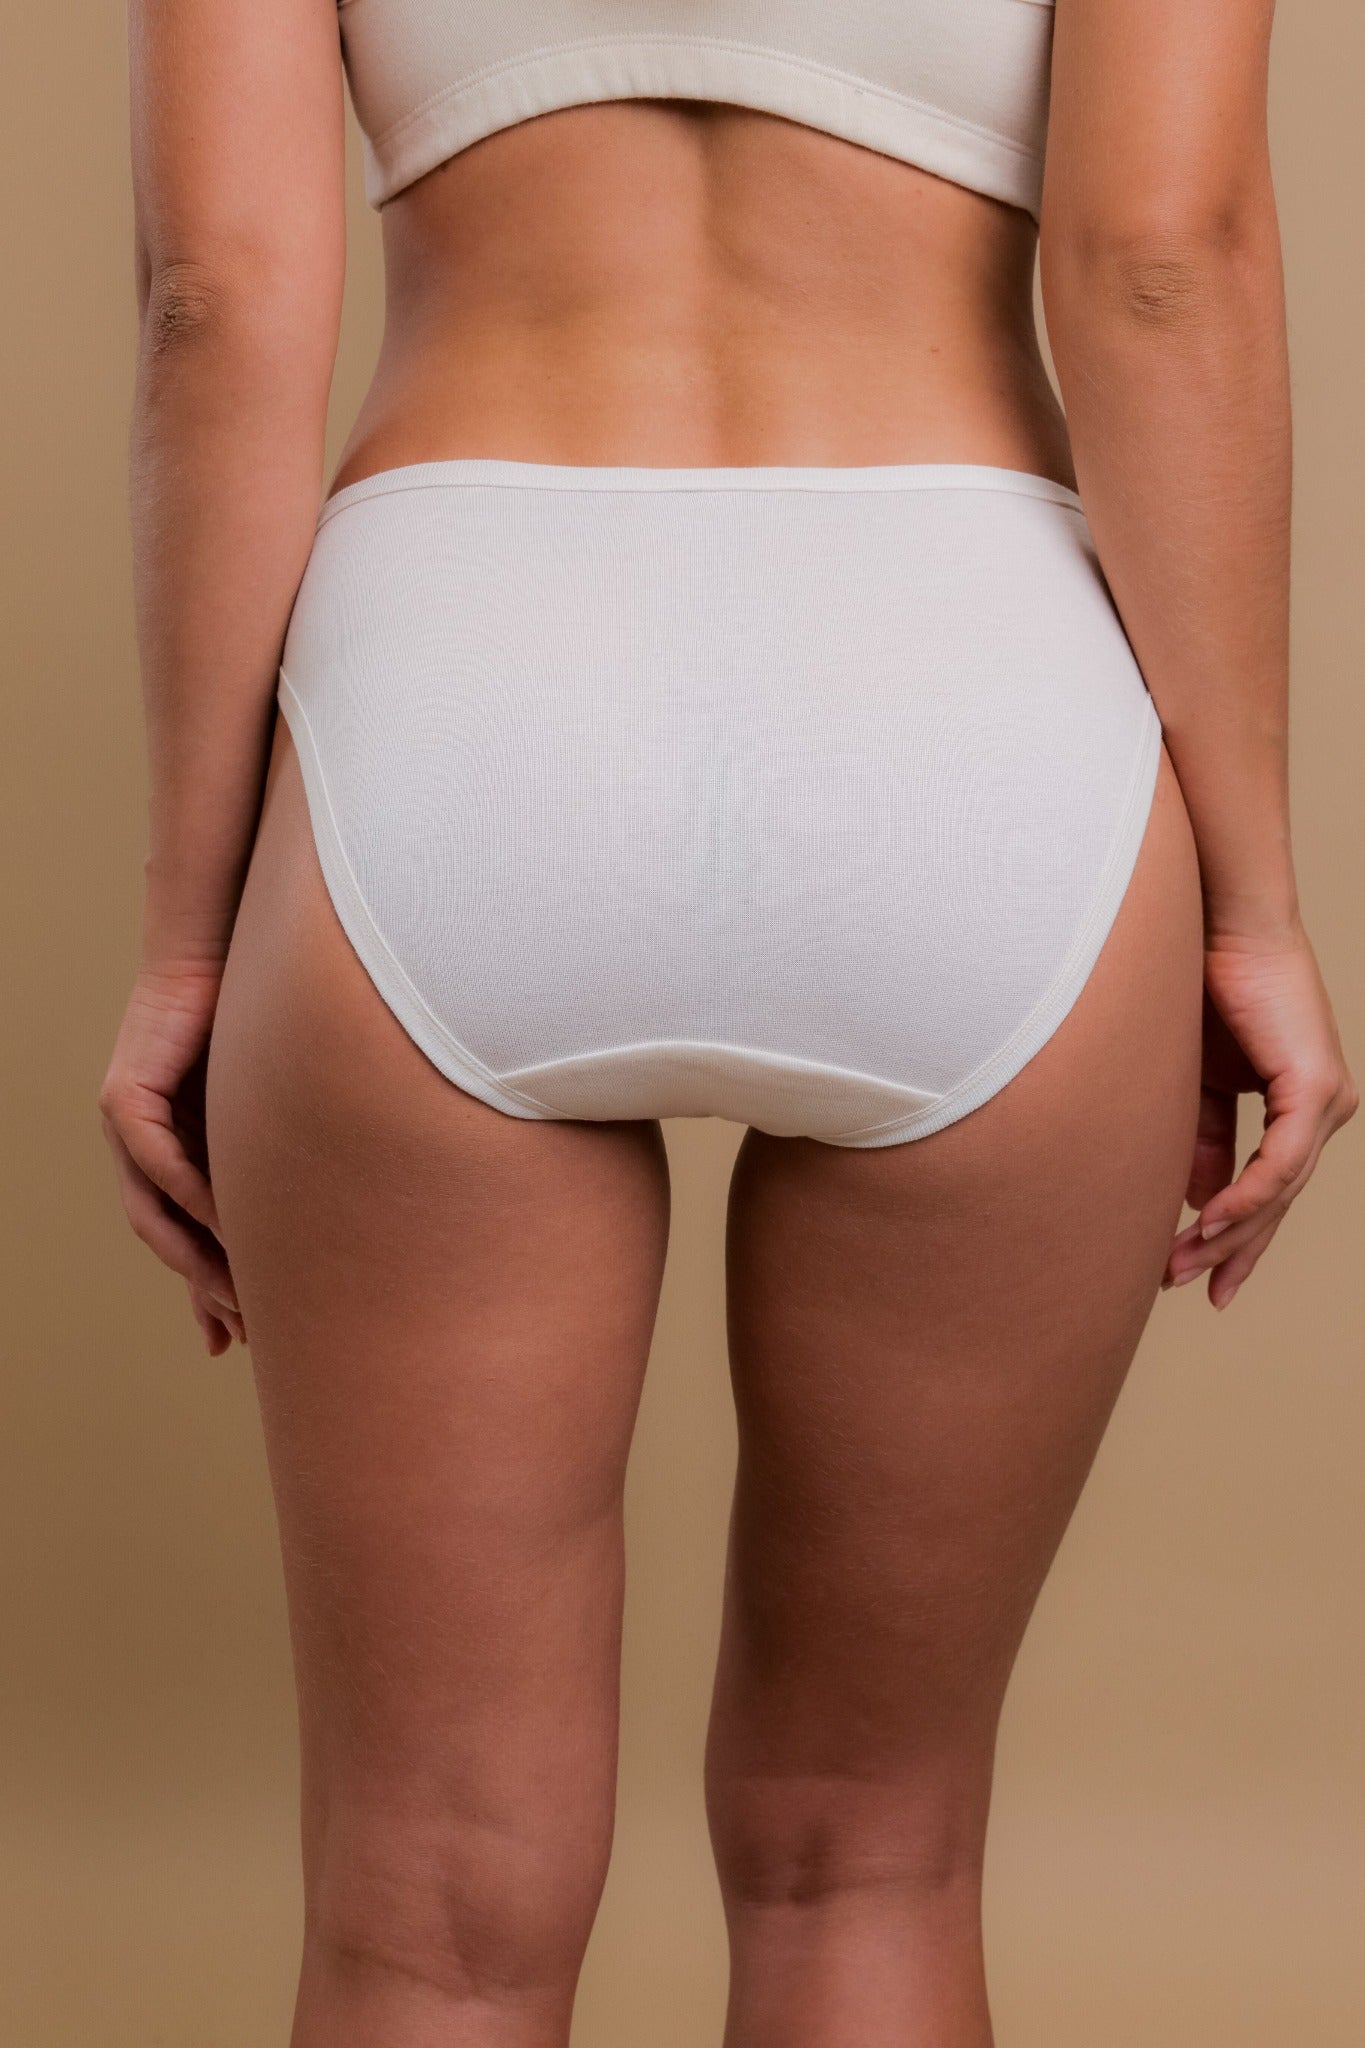 Women's Organic Cotton Bikini Underwear | Women Panties Combo Pack of 3 |  Chemical-free & Spandex-free